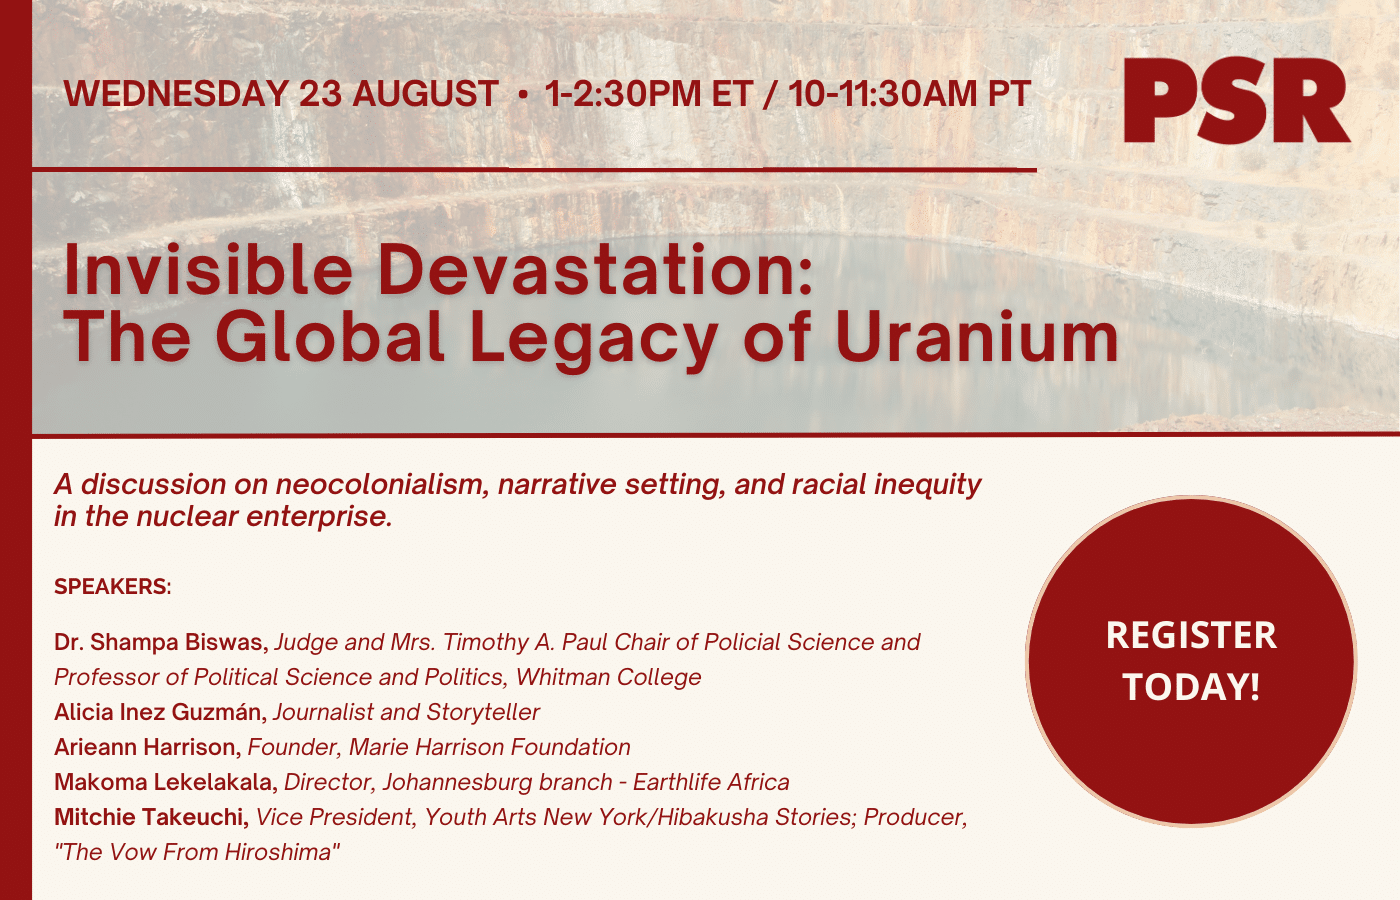 Wed Aug 23 1-2:30 pm ET: Invisible Devastation: The Global Legacy of Uranium. Speakers: Dr. Shampa Biswas, Alicia Inez Guzman, Arieann Harrison, Makoma Lekelakala, Mitche Takeuchi. Register Today!